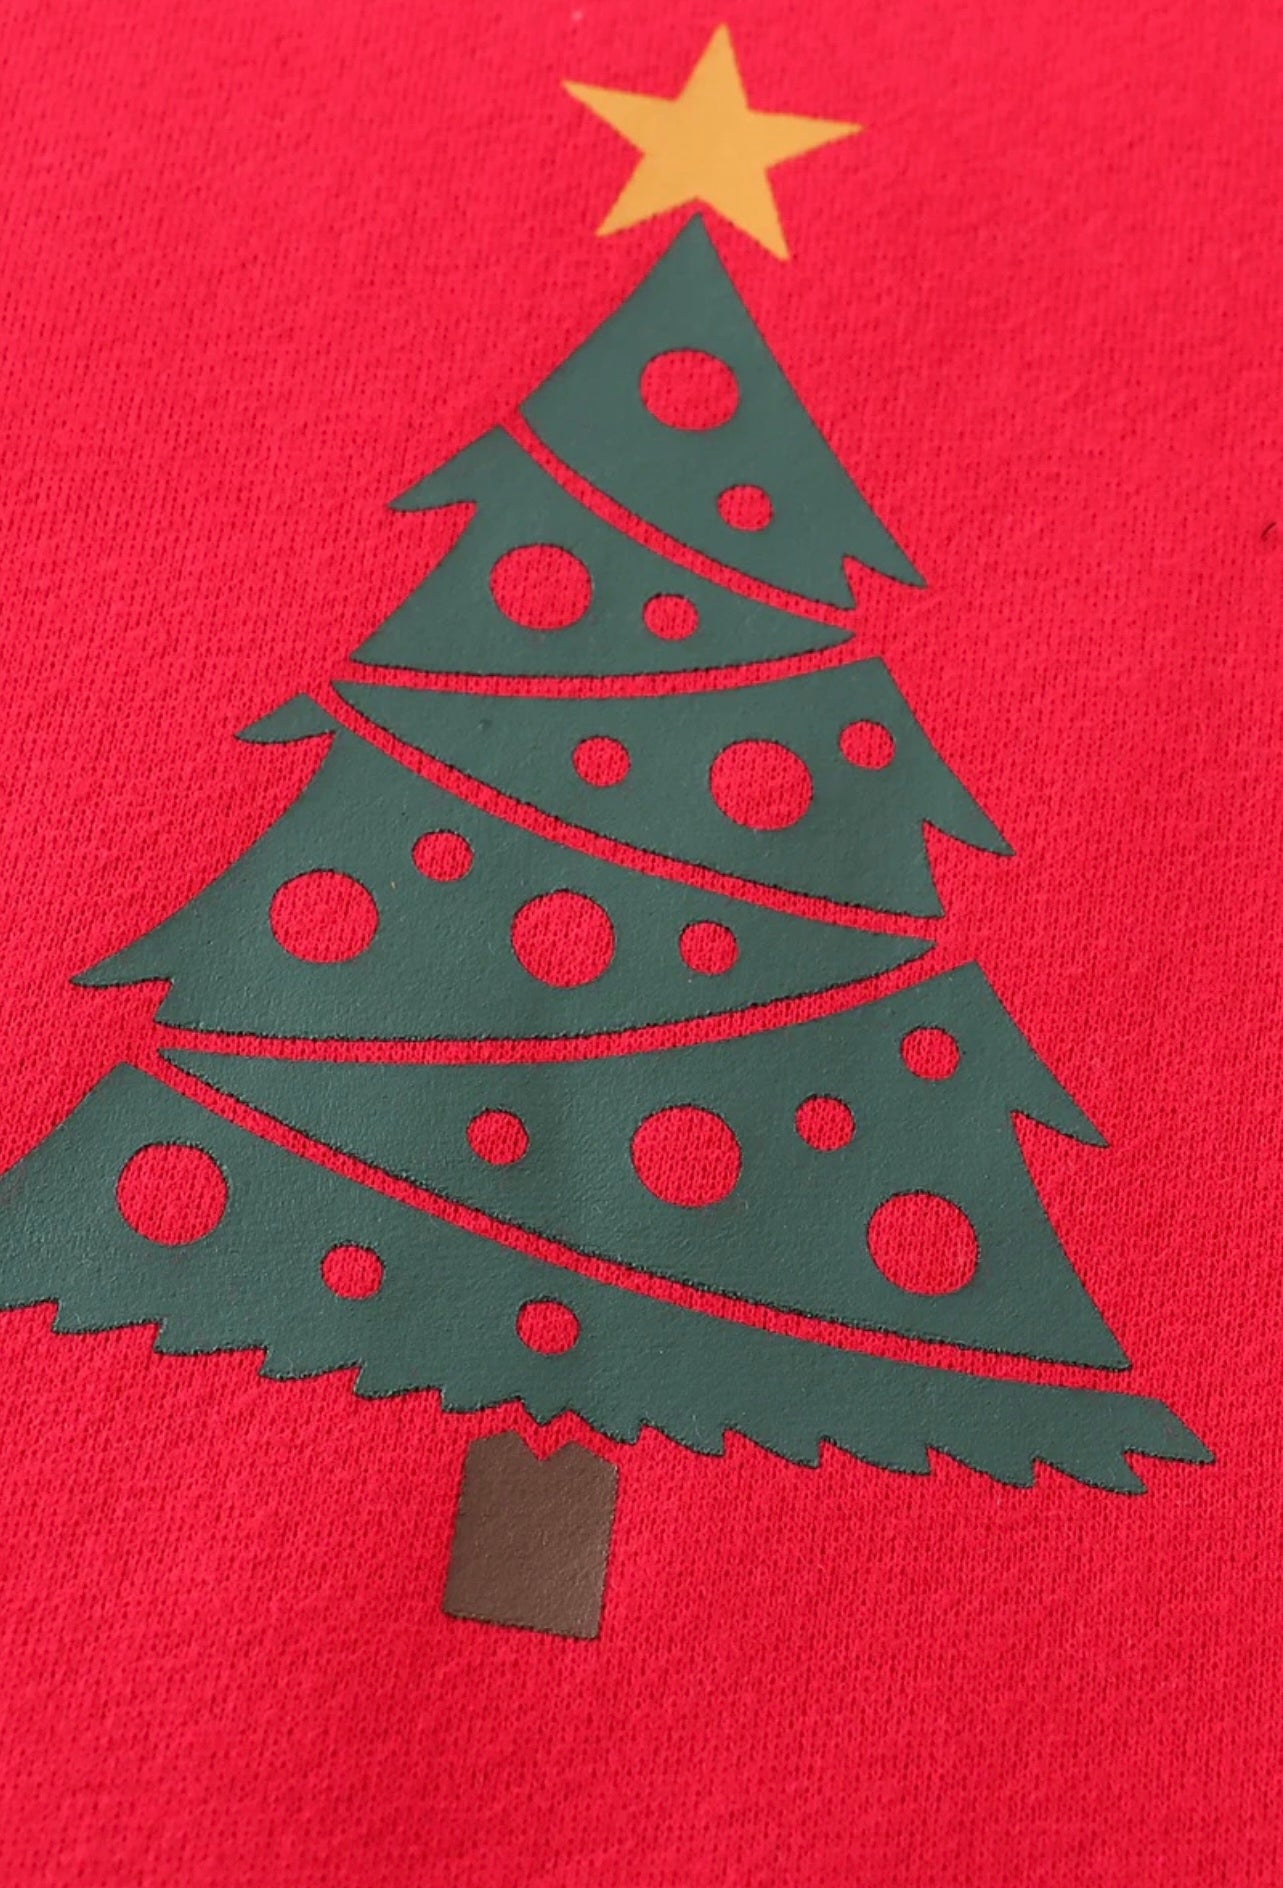 Kids Red Christmas Tree Ruffle Tutu Skirt Set